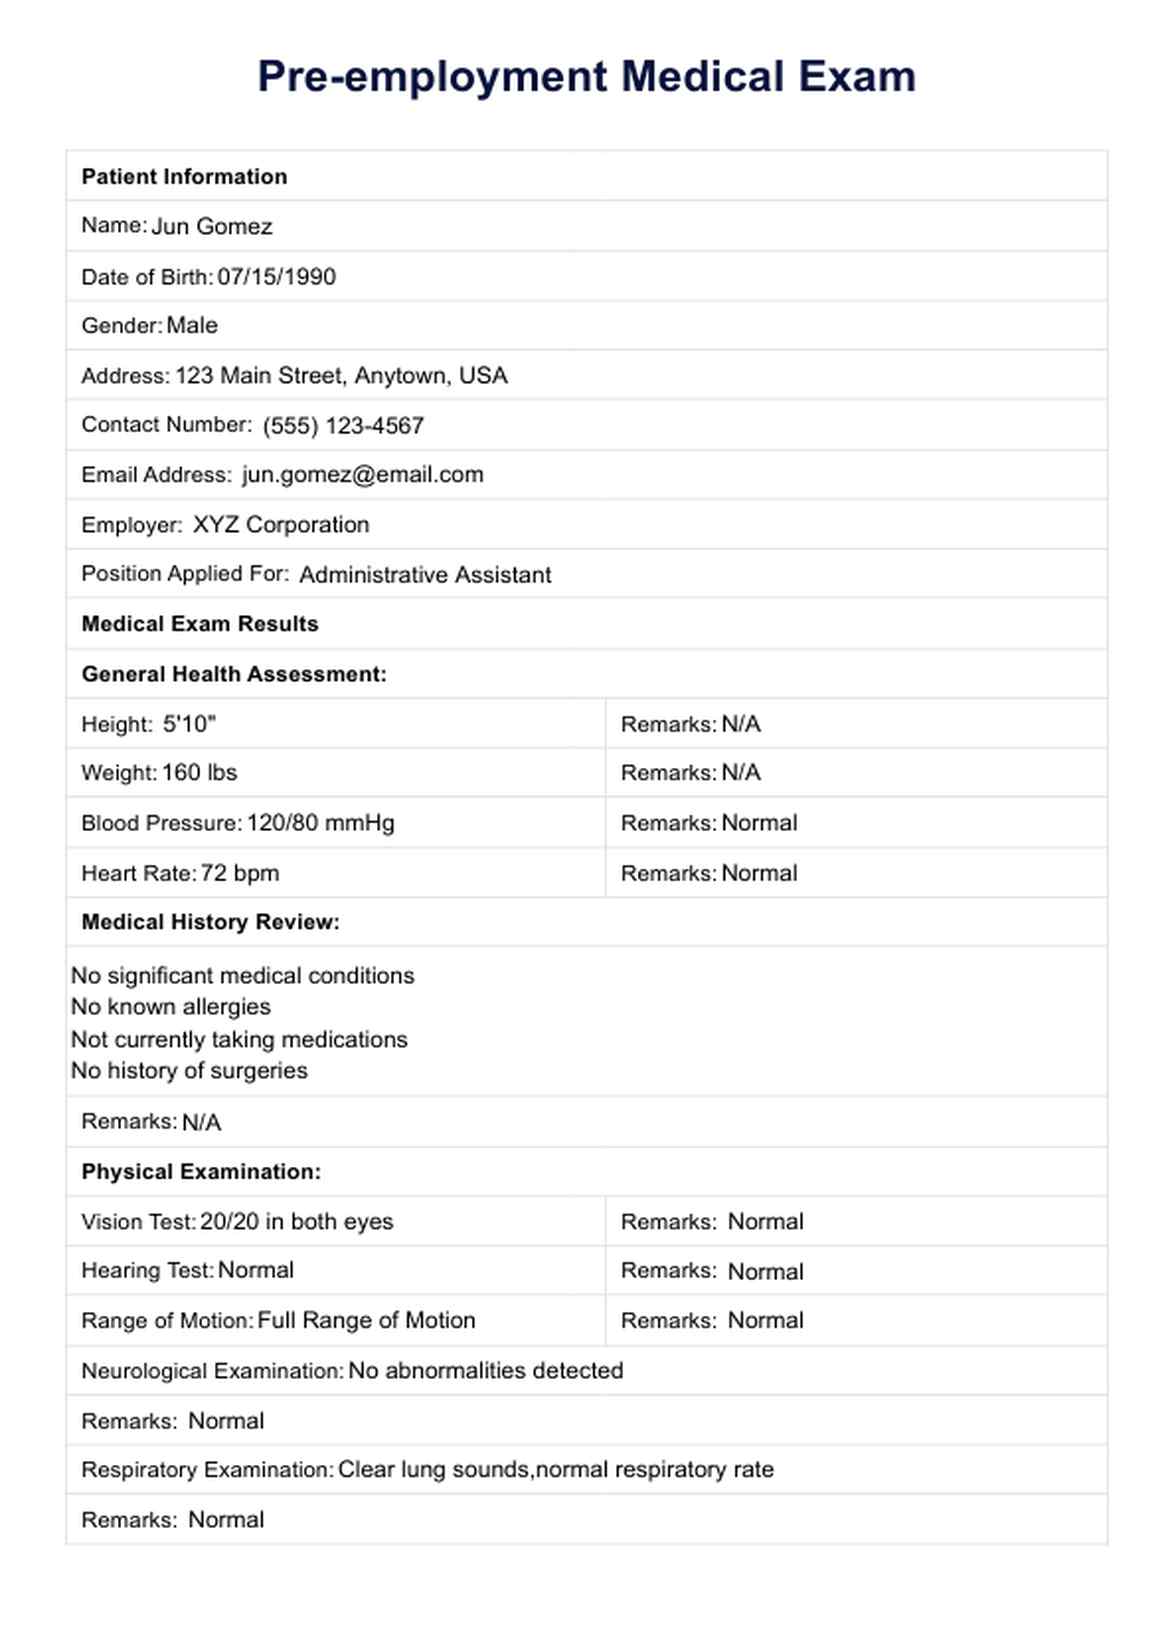 Pre-employment Medical Exam PDF Example